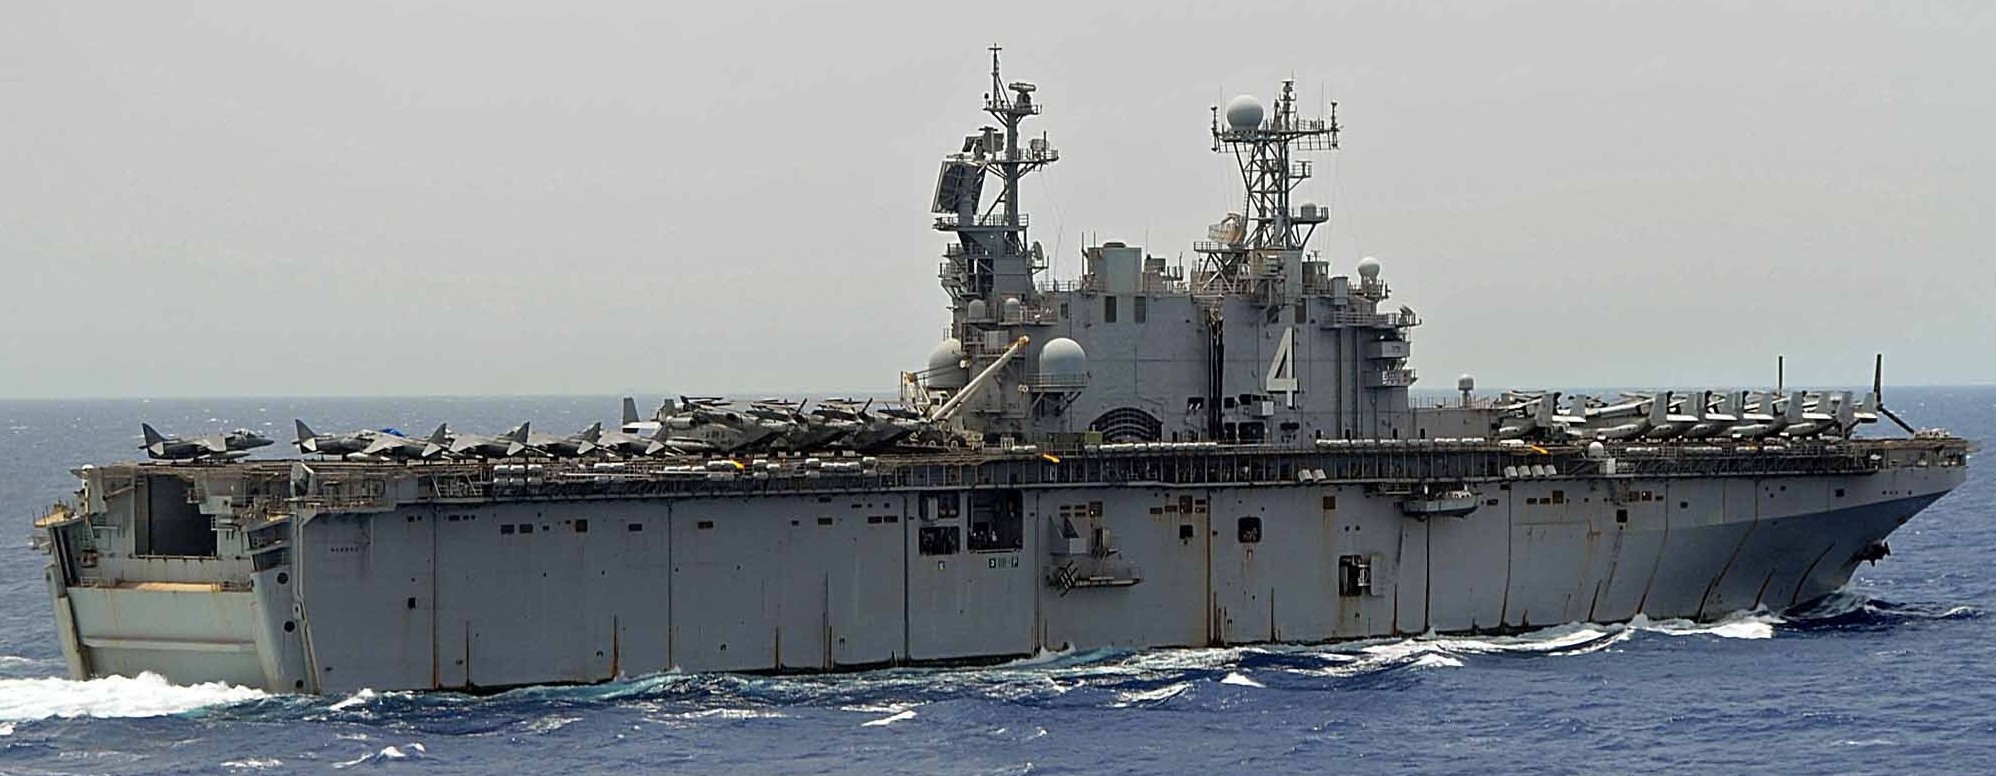 lha-4 uss nassau tarawa class amphibious assault ship us navy 59 vmm-162 24meu soc